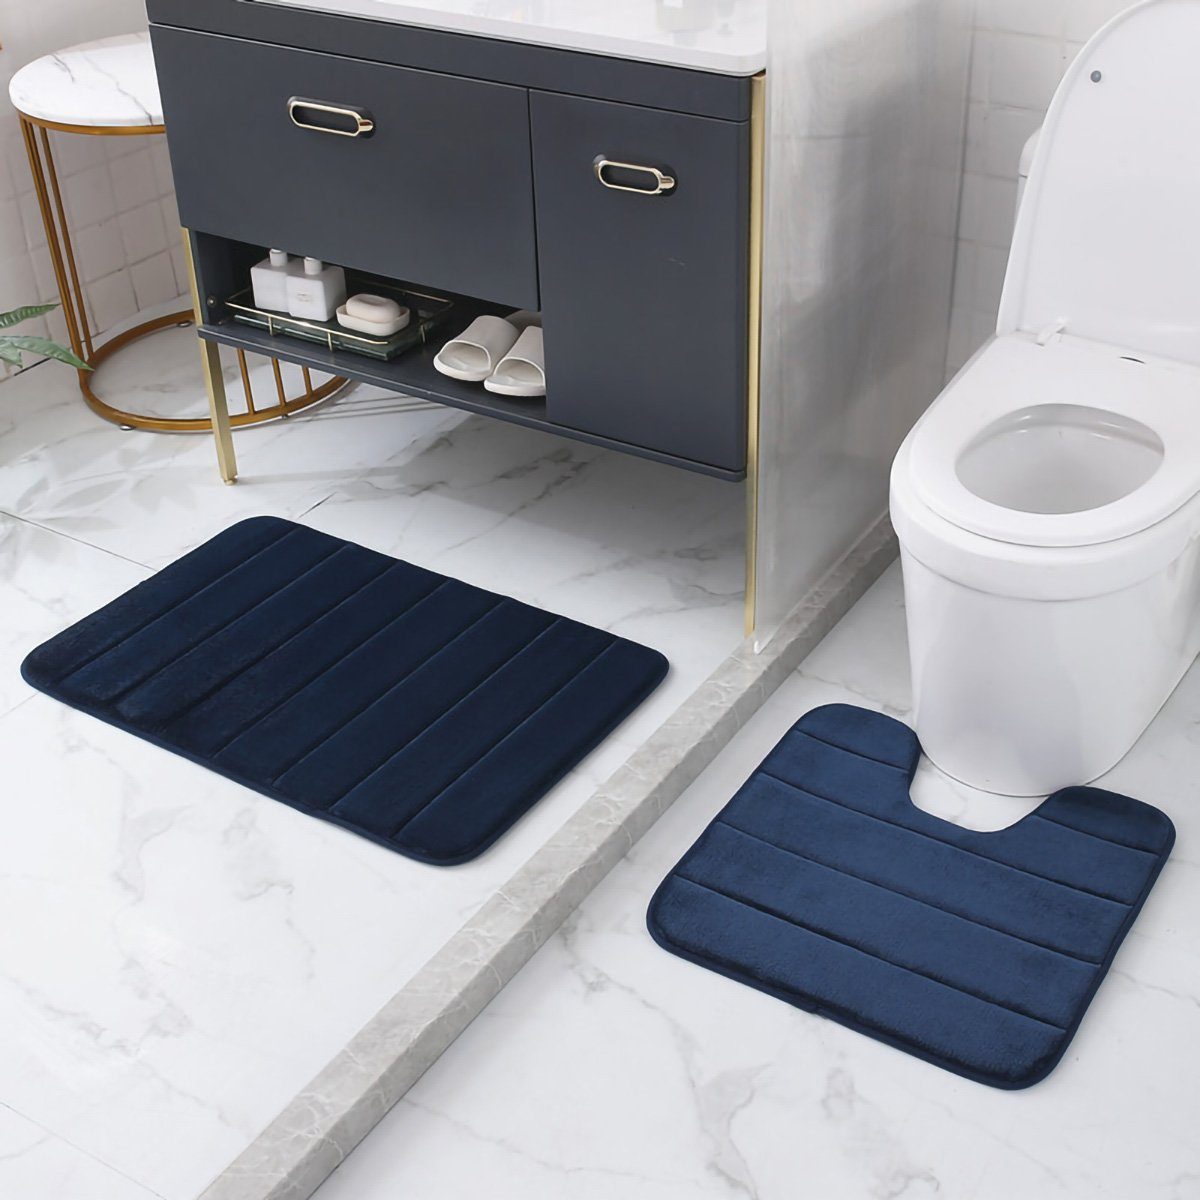 Kaufe Badezimmer saugfähige rutschfeste Matte Türmatte Toilette